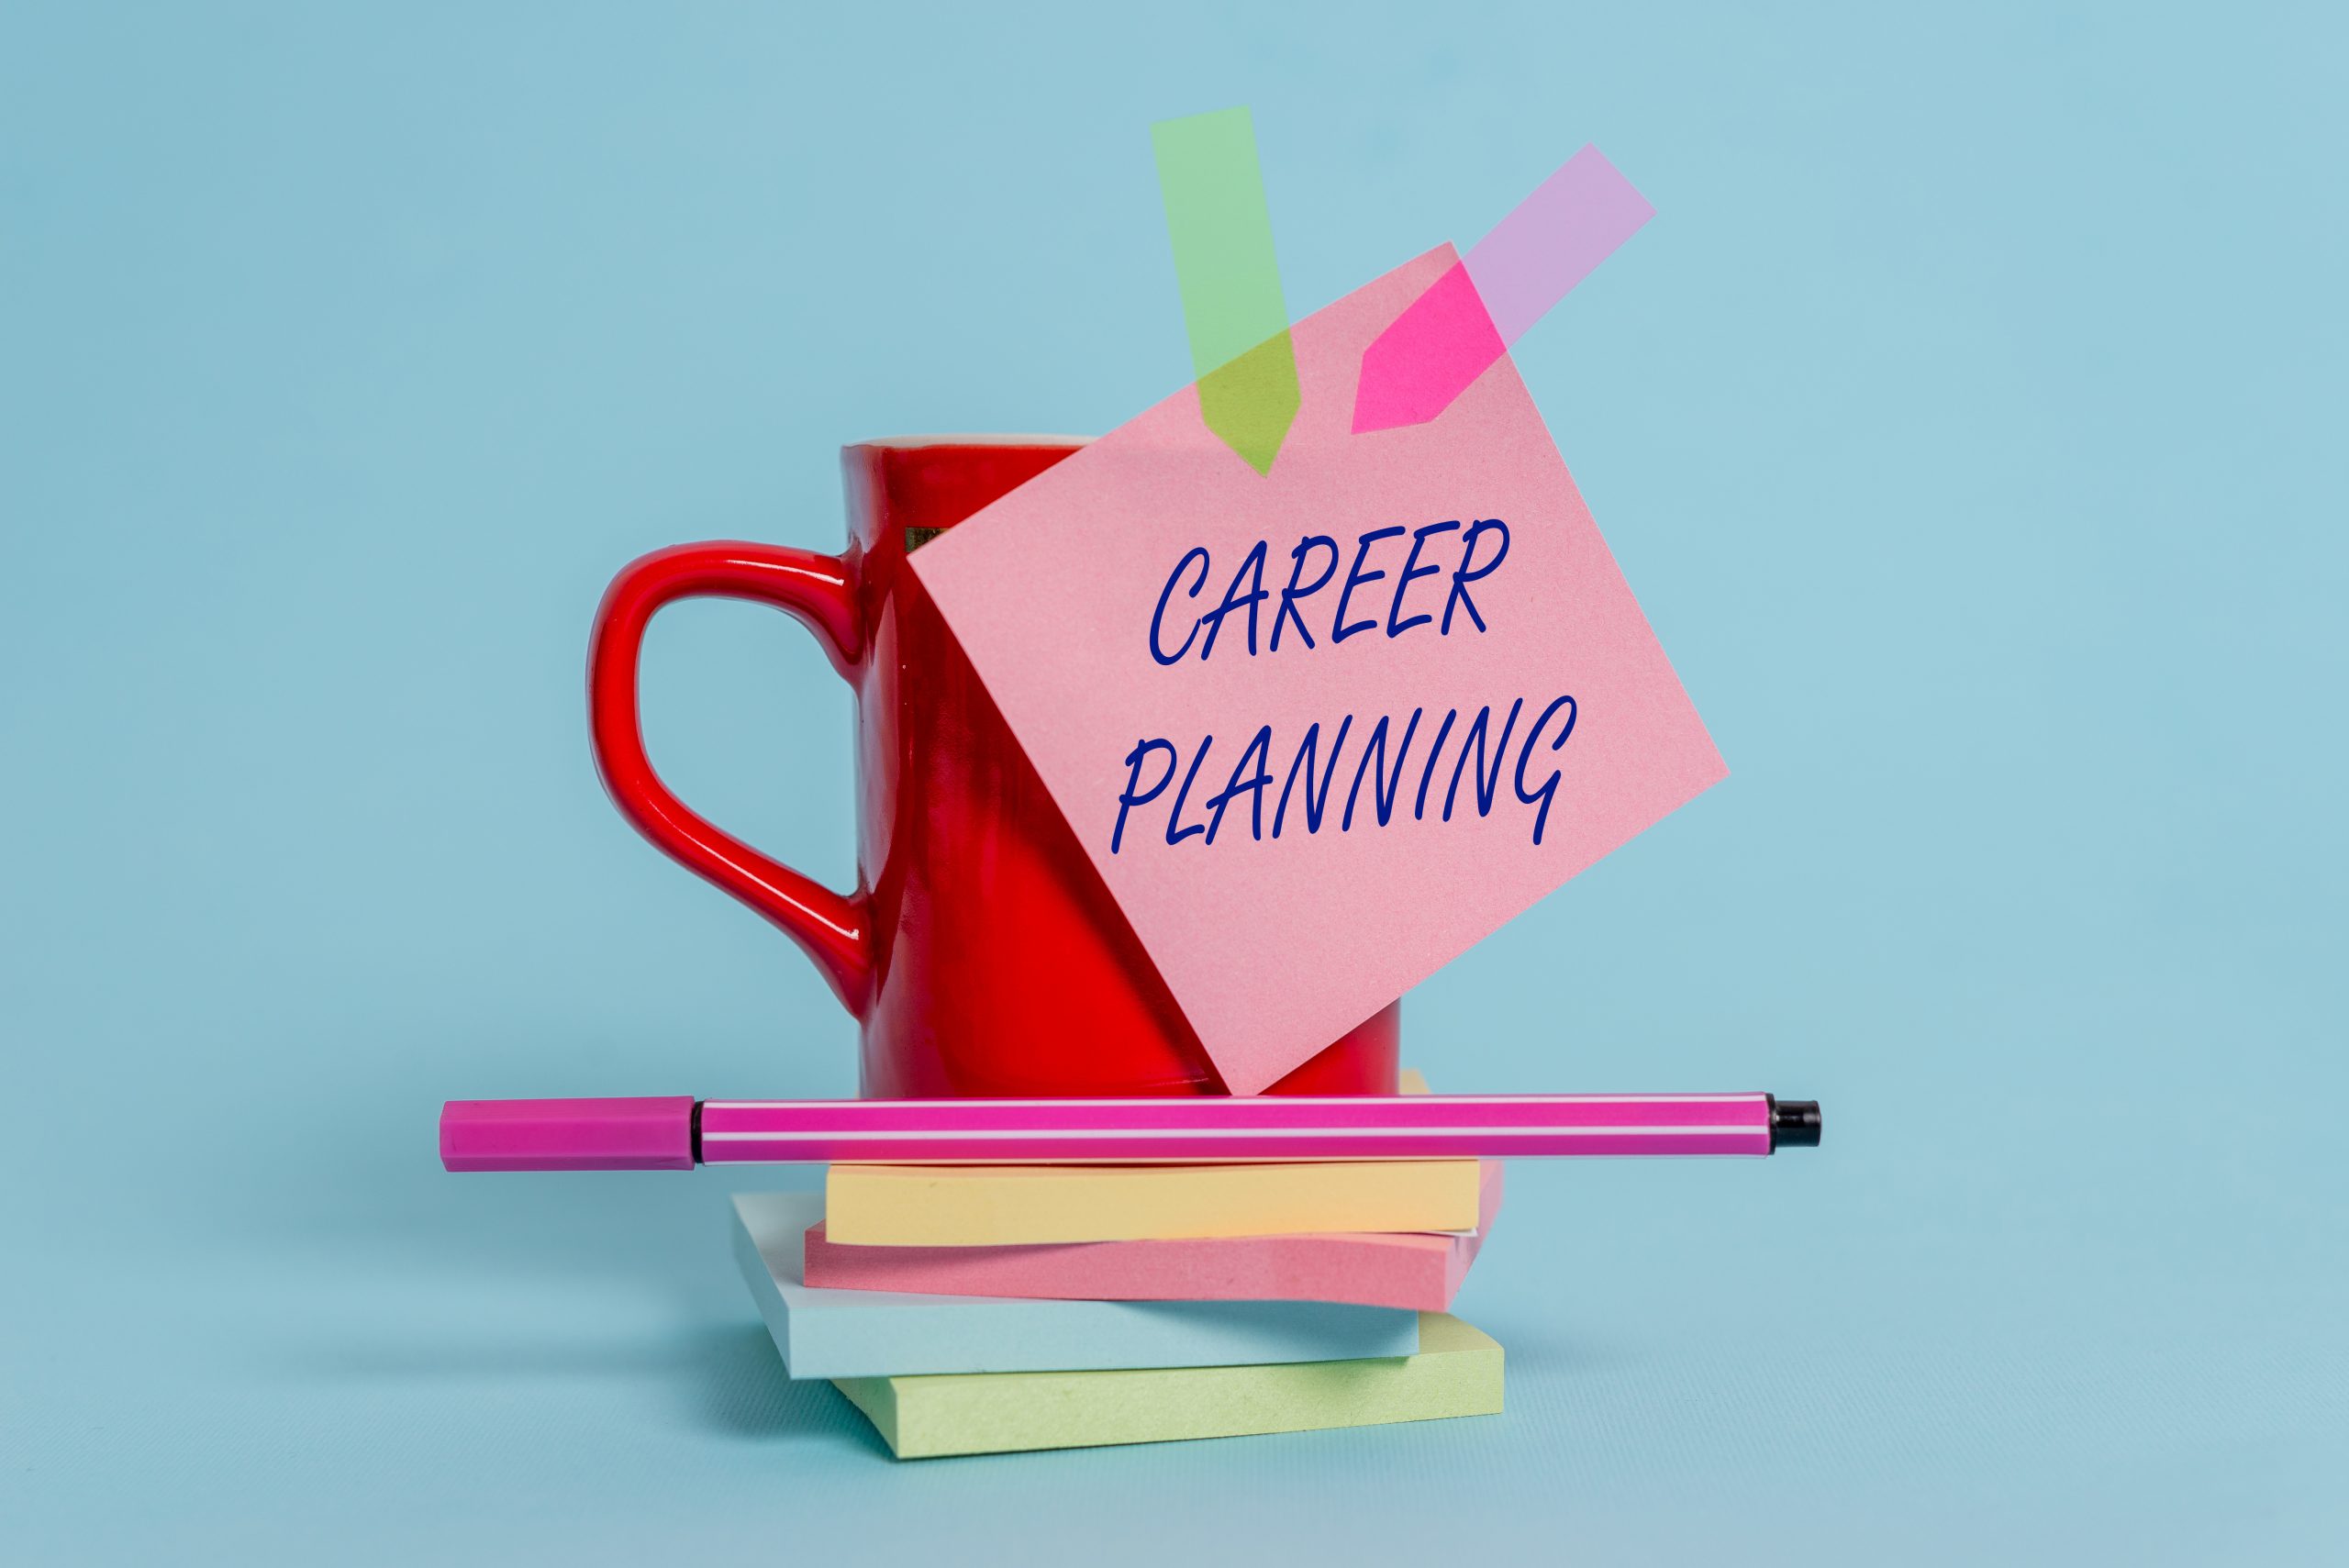 career plan template